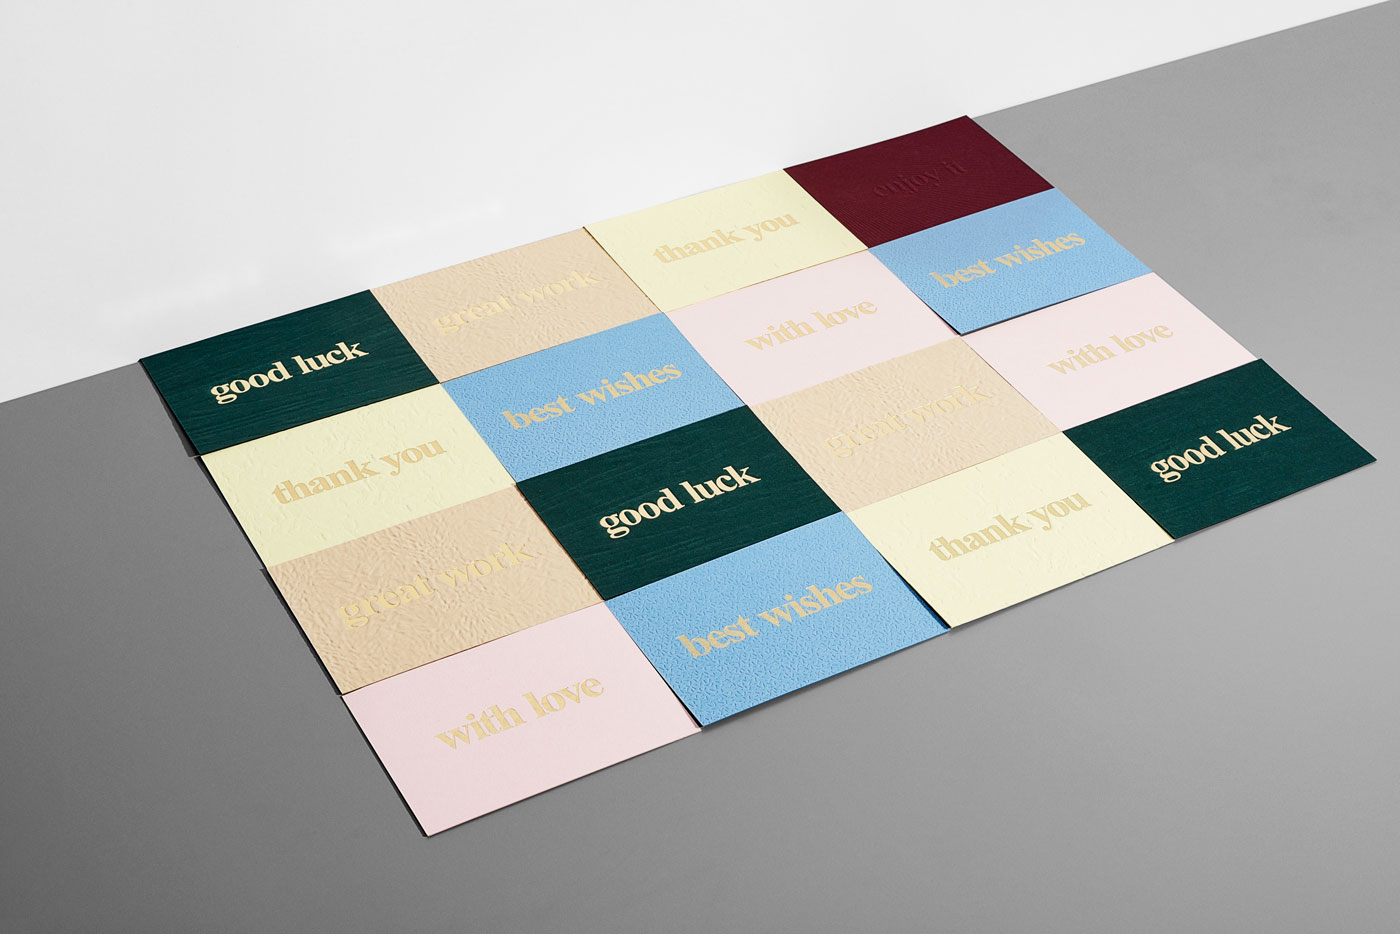 Imprimerie du Marais – Greeting cards